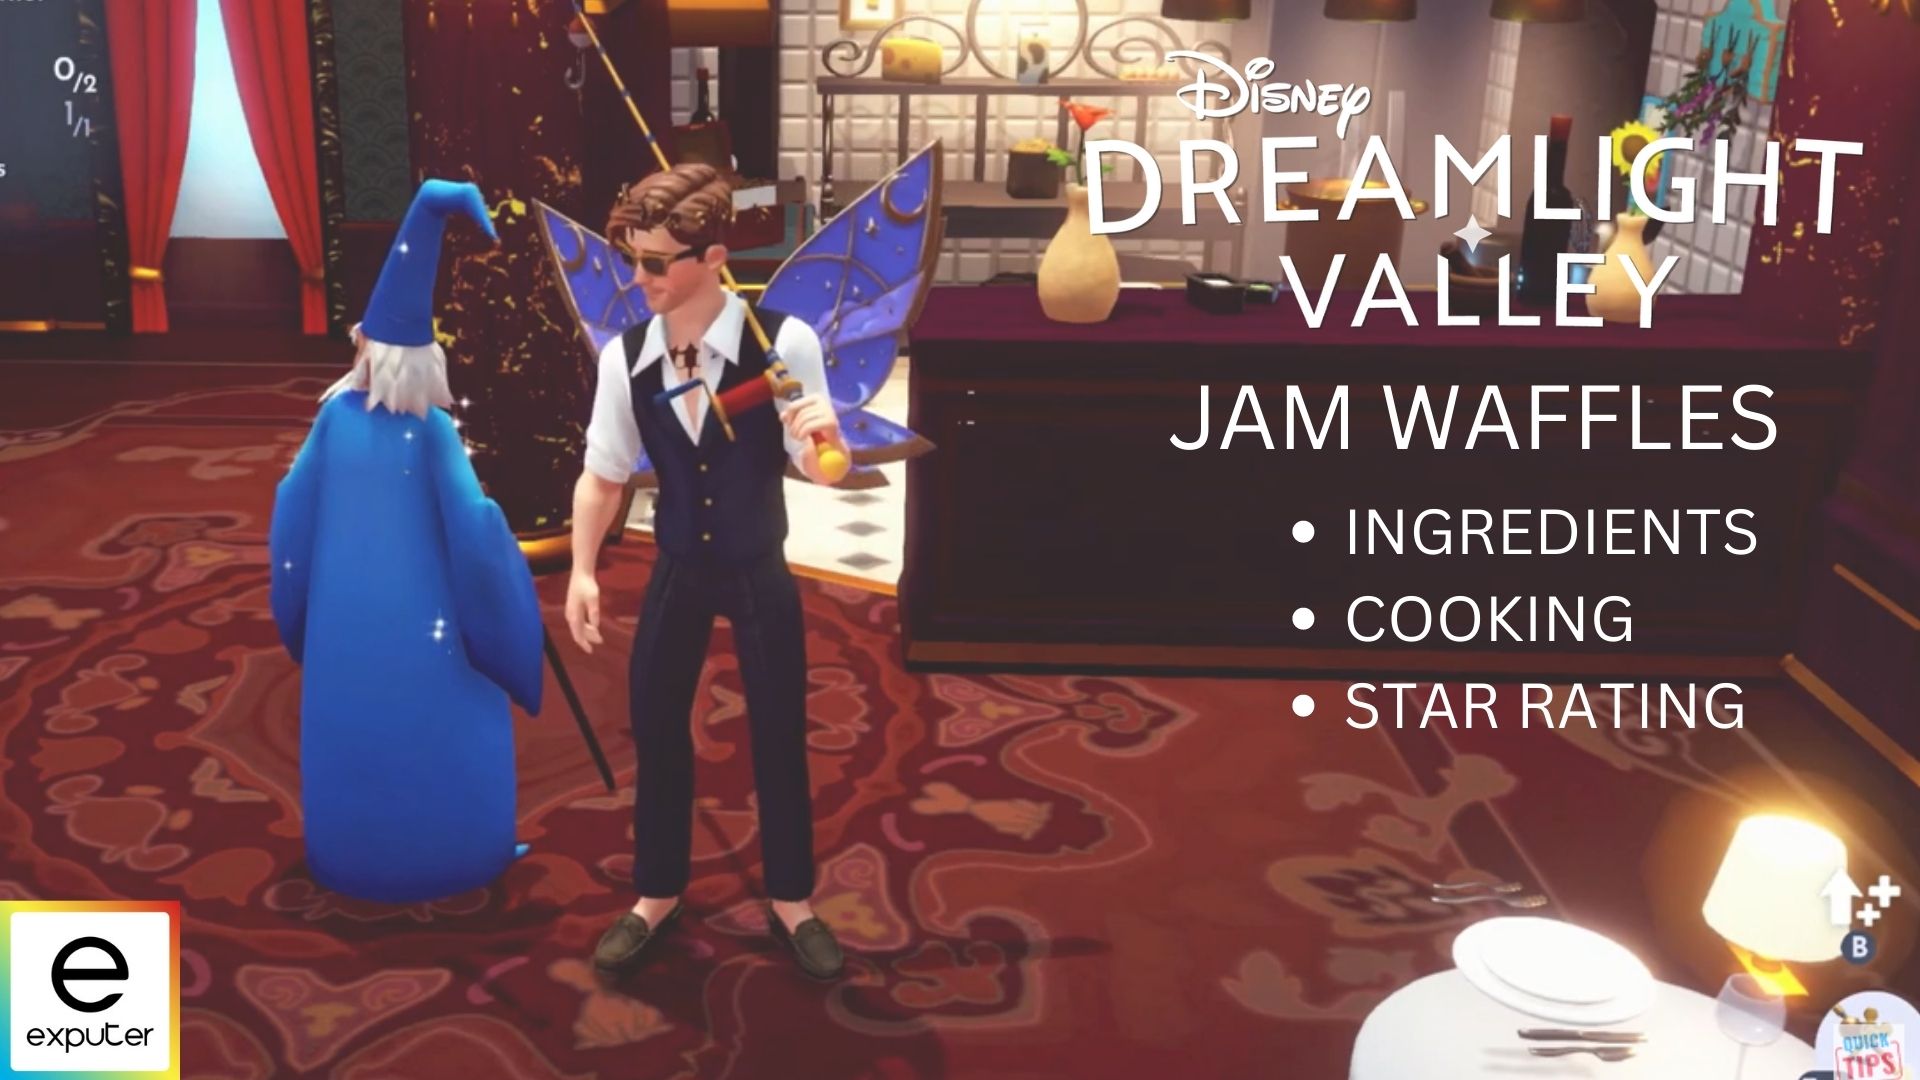 How To Make Disney Dreamlight Valley Jam Waffles